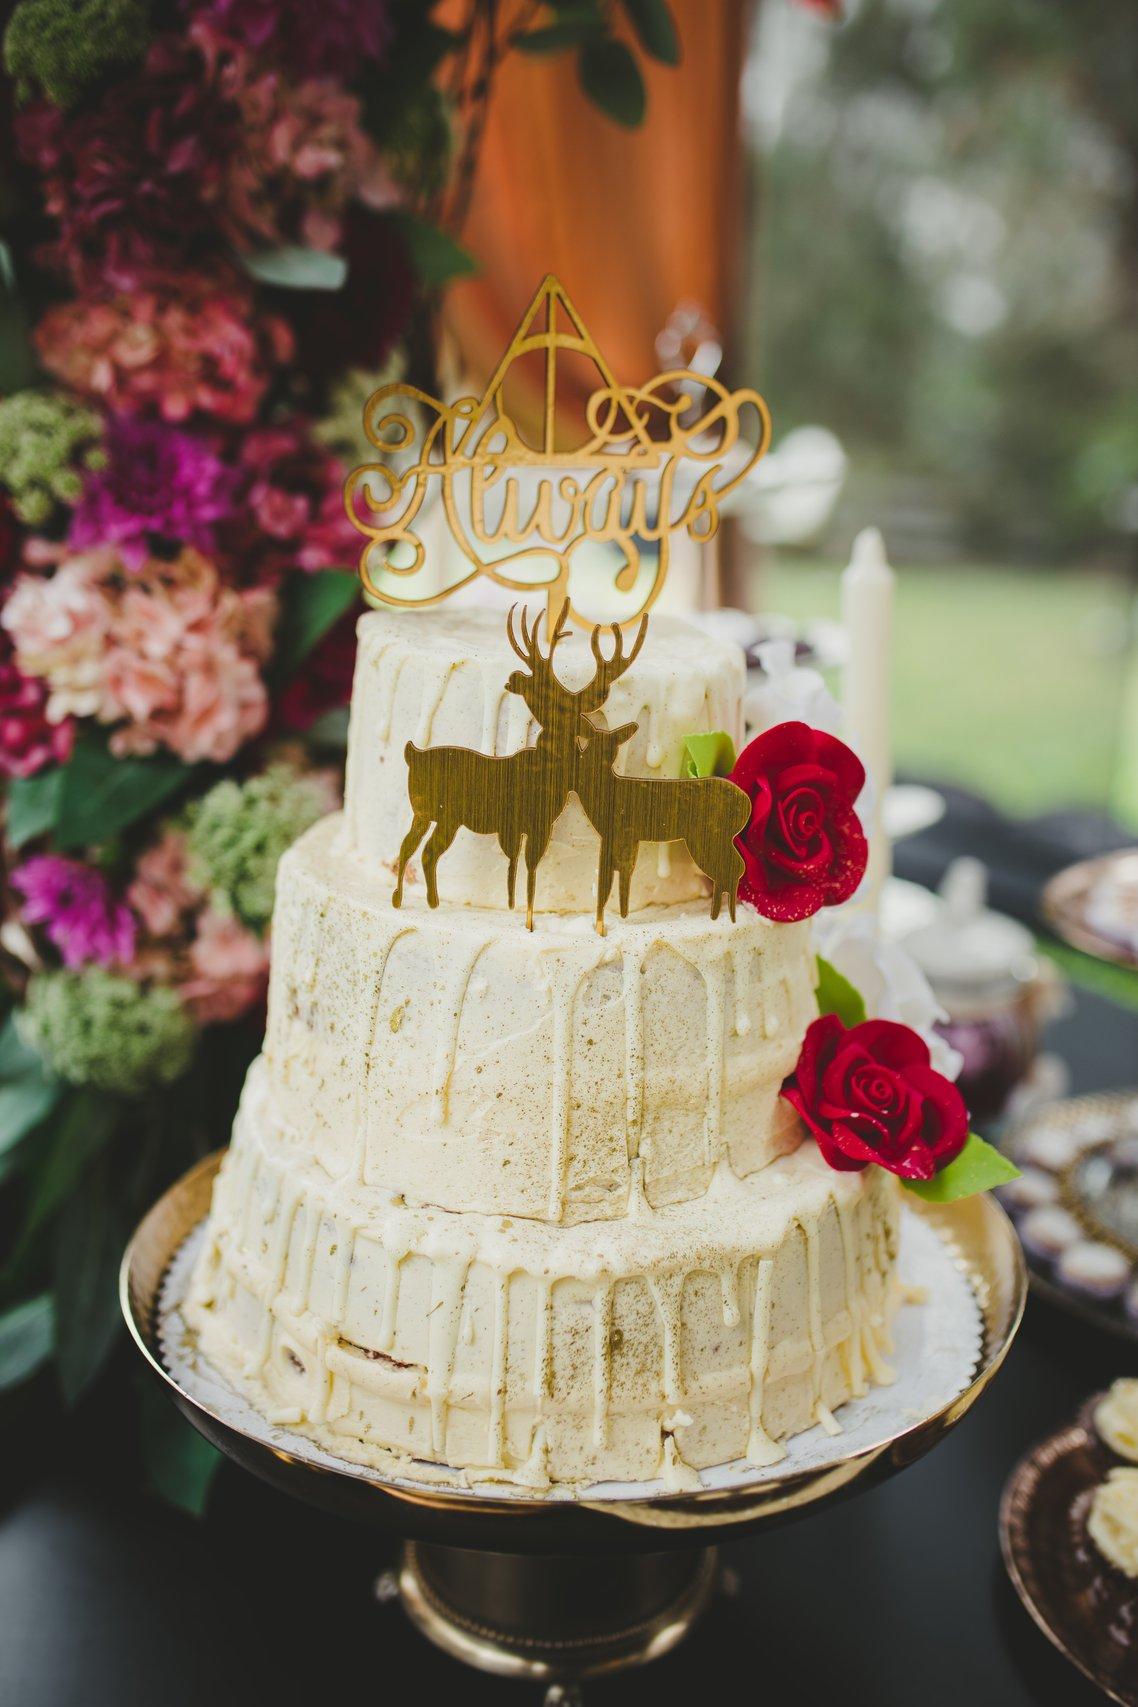 modelo de torta de matrimonio con volantes de bittercream y rosas rojas con topper dorado